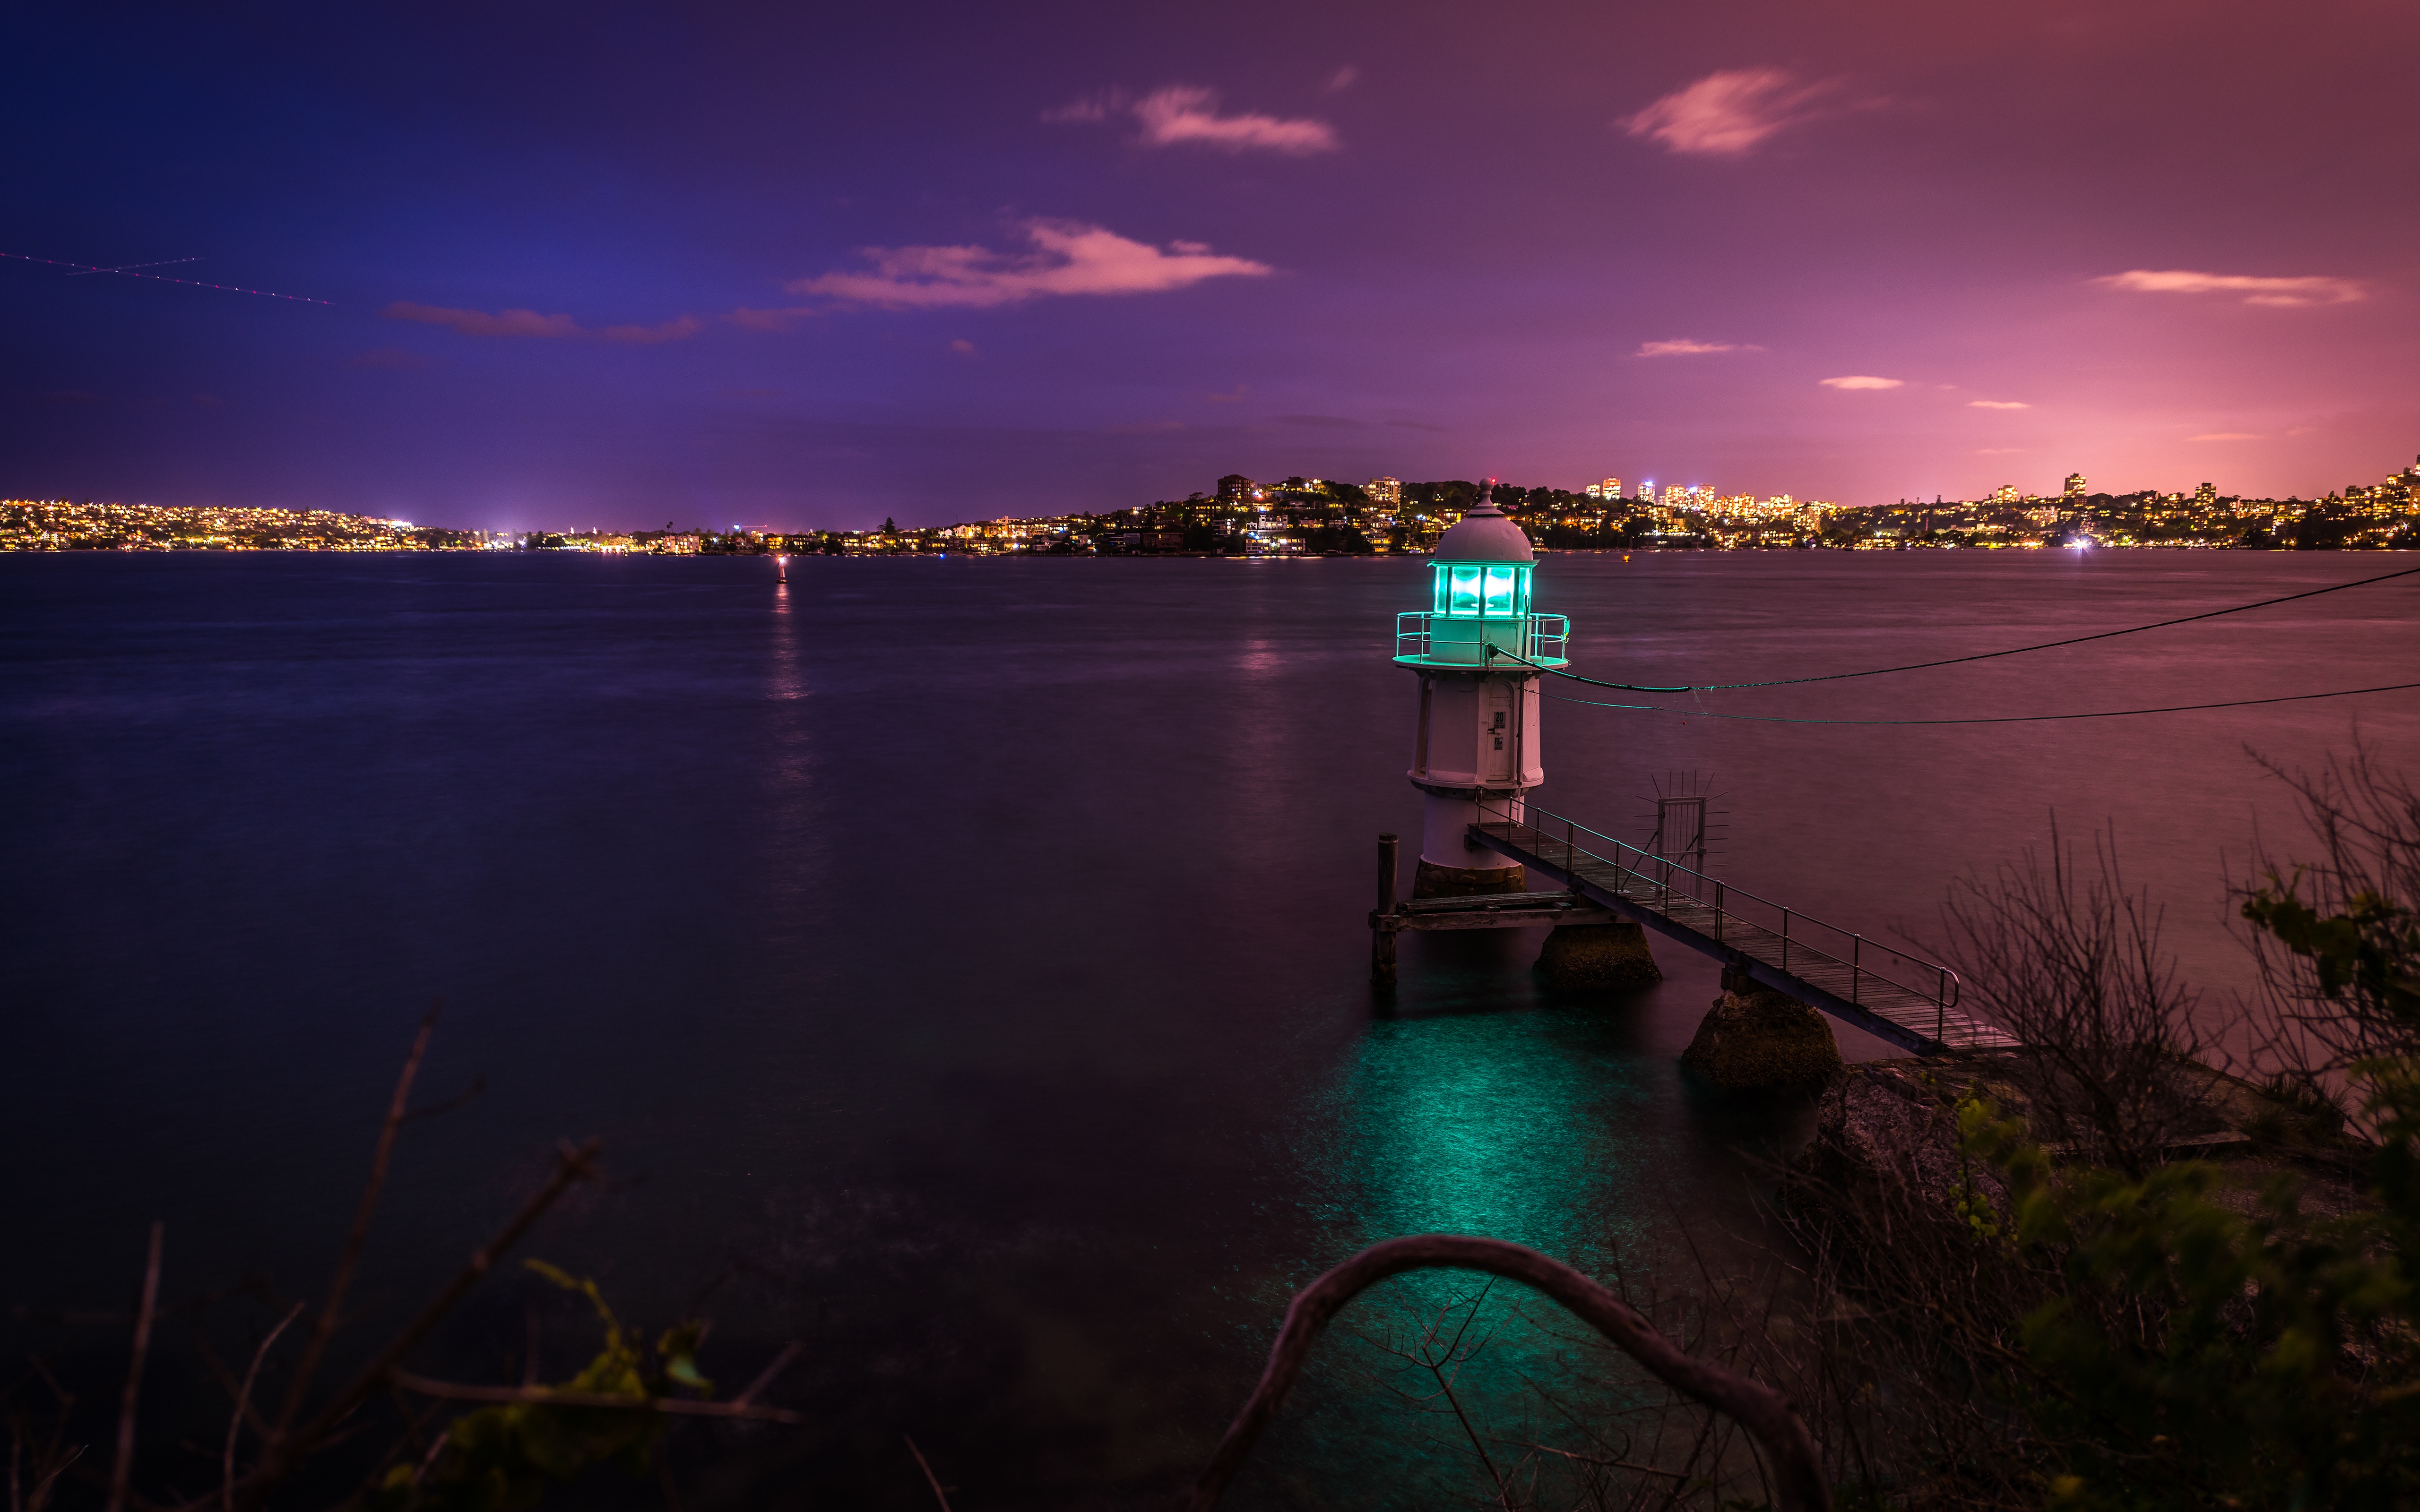 HD wallpaper, Lighthouse, 5K, Australia, Night City, City Lights, Dusk, Sydney Harbour